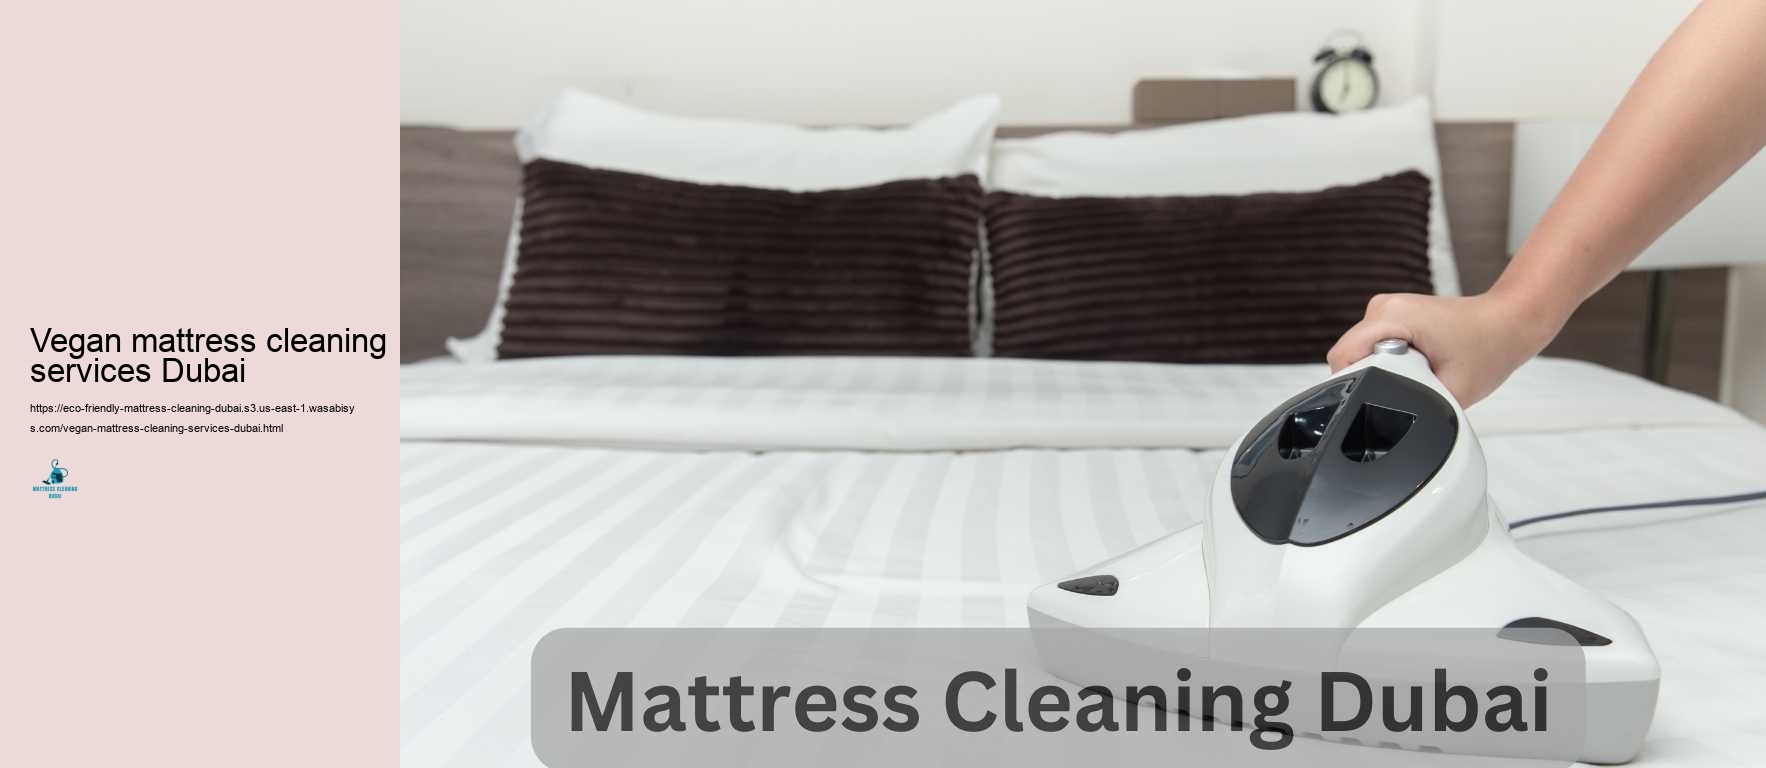 Vegan mattress cleaning services Dubai